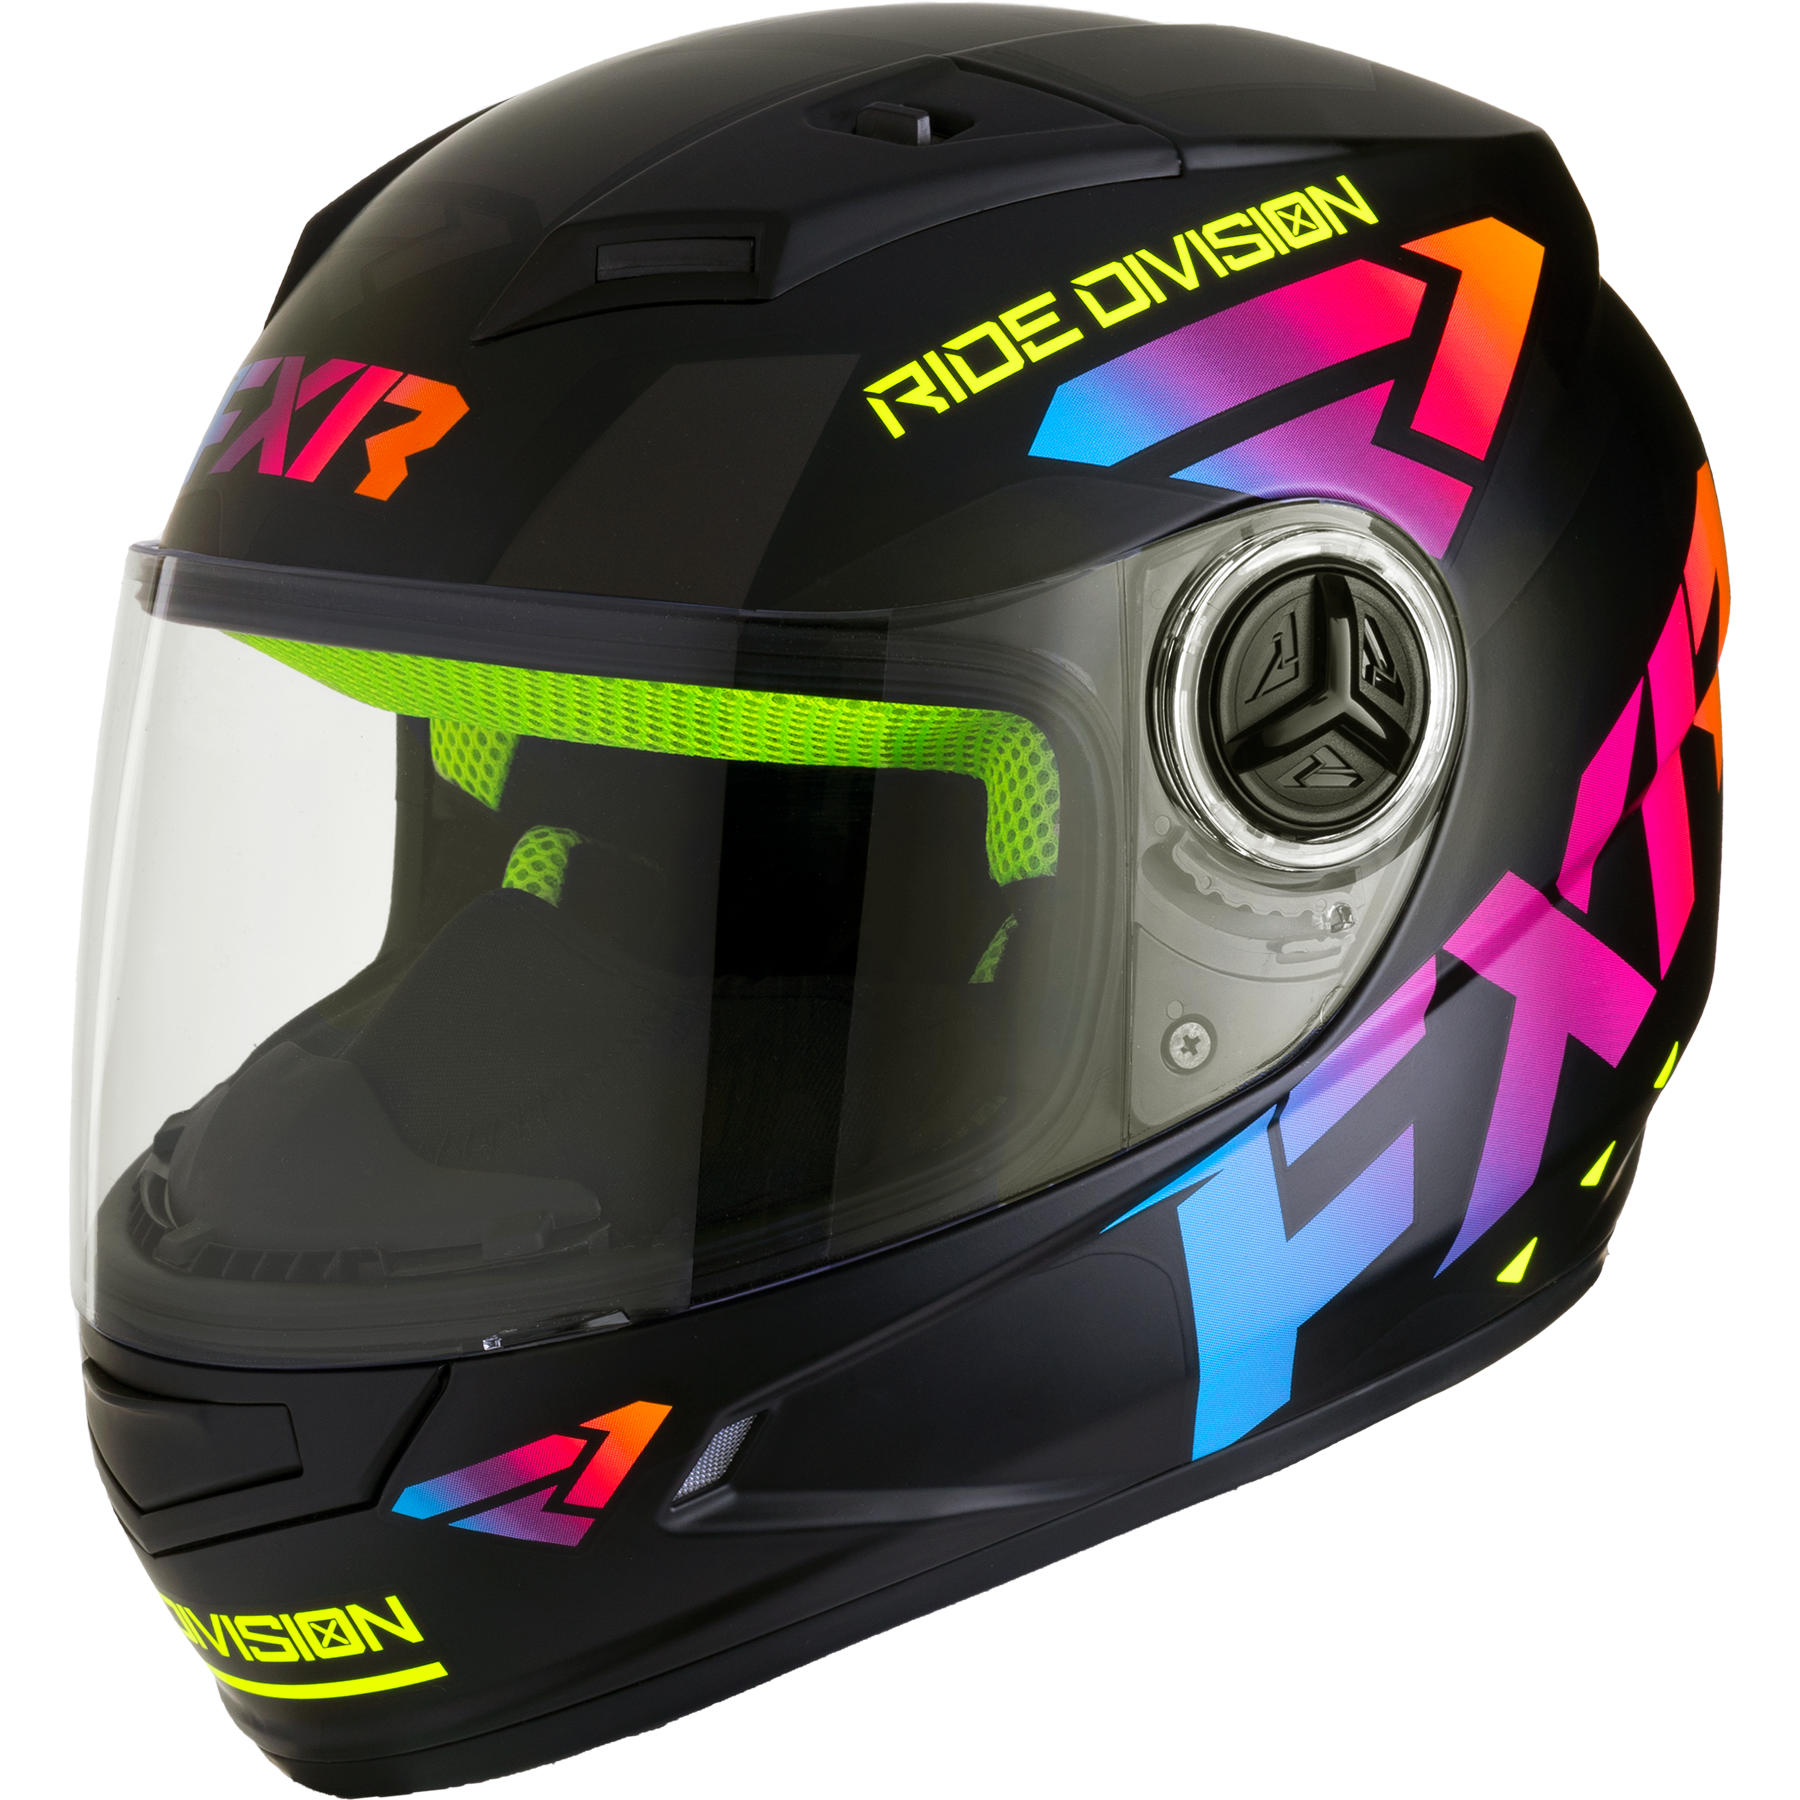 fxr racing dual shield full face helmets for kids nitro